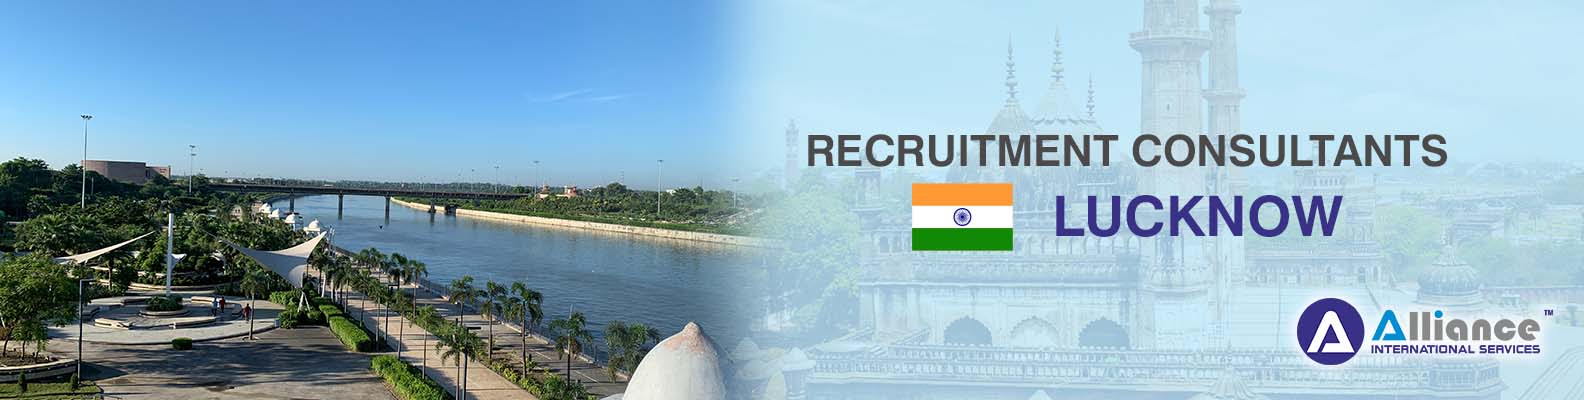 Recruitment Consultants Lucknow